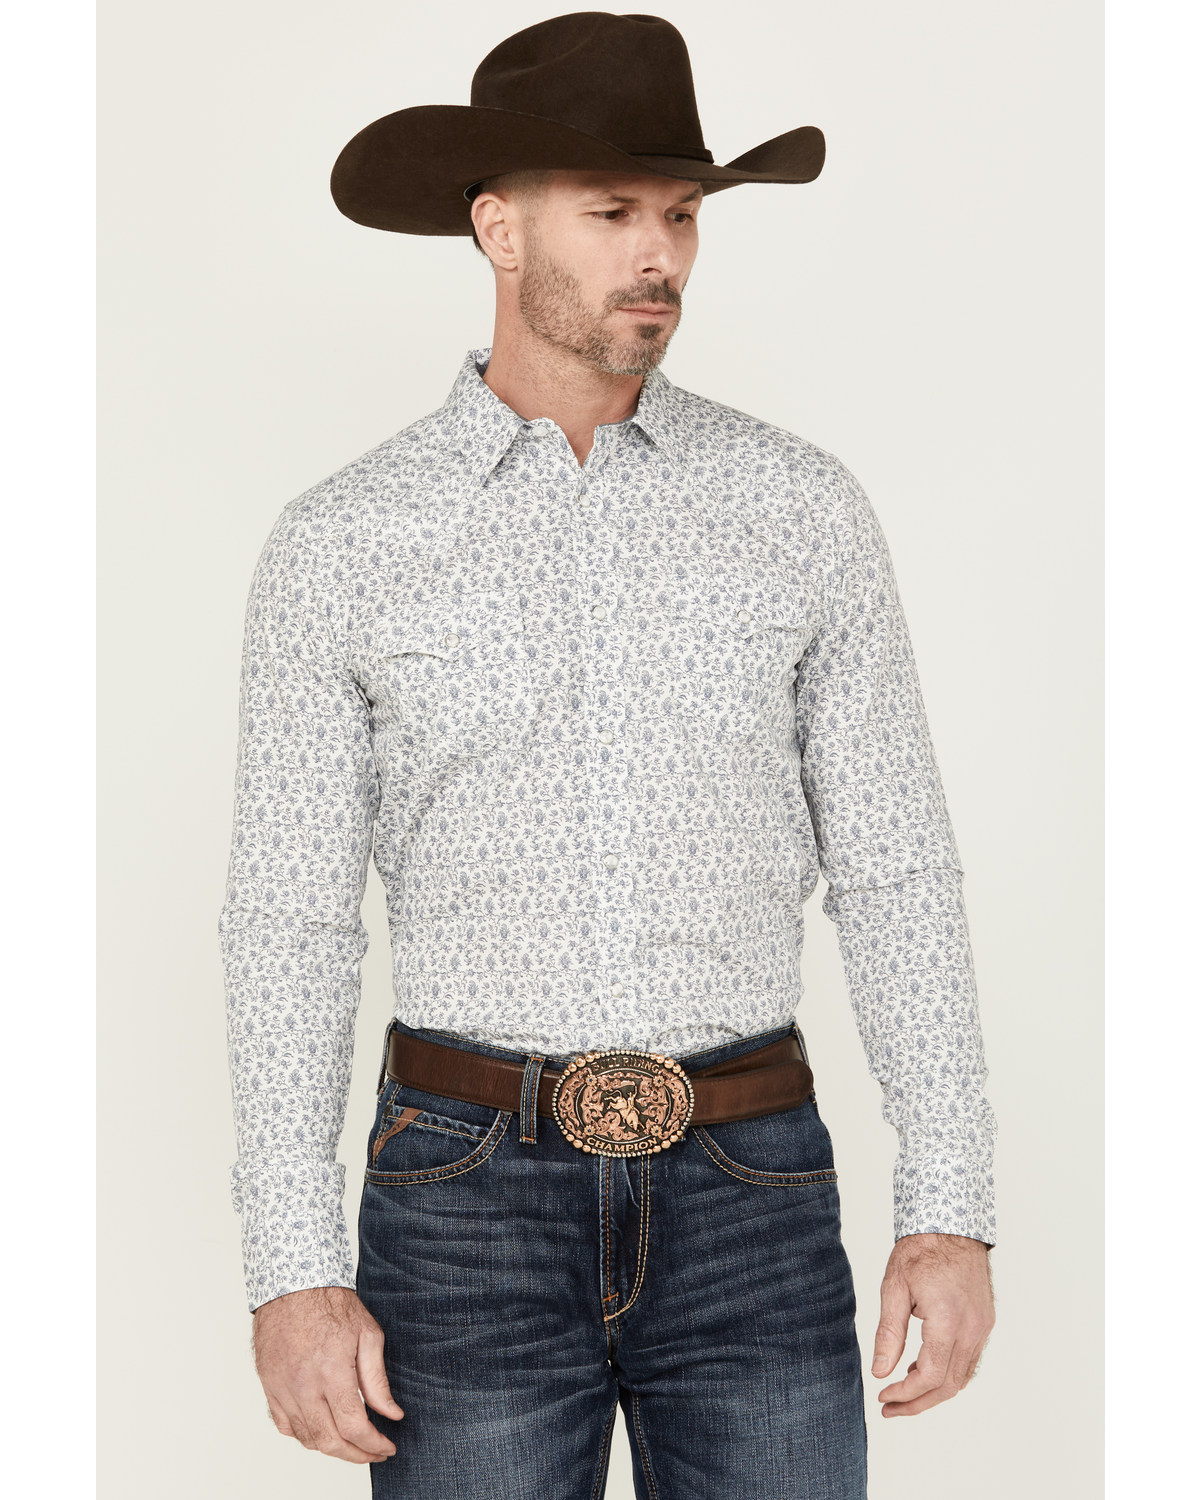 Cody James Men's Dandy Floral Print Long Sleeve Snap Western Shirt